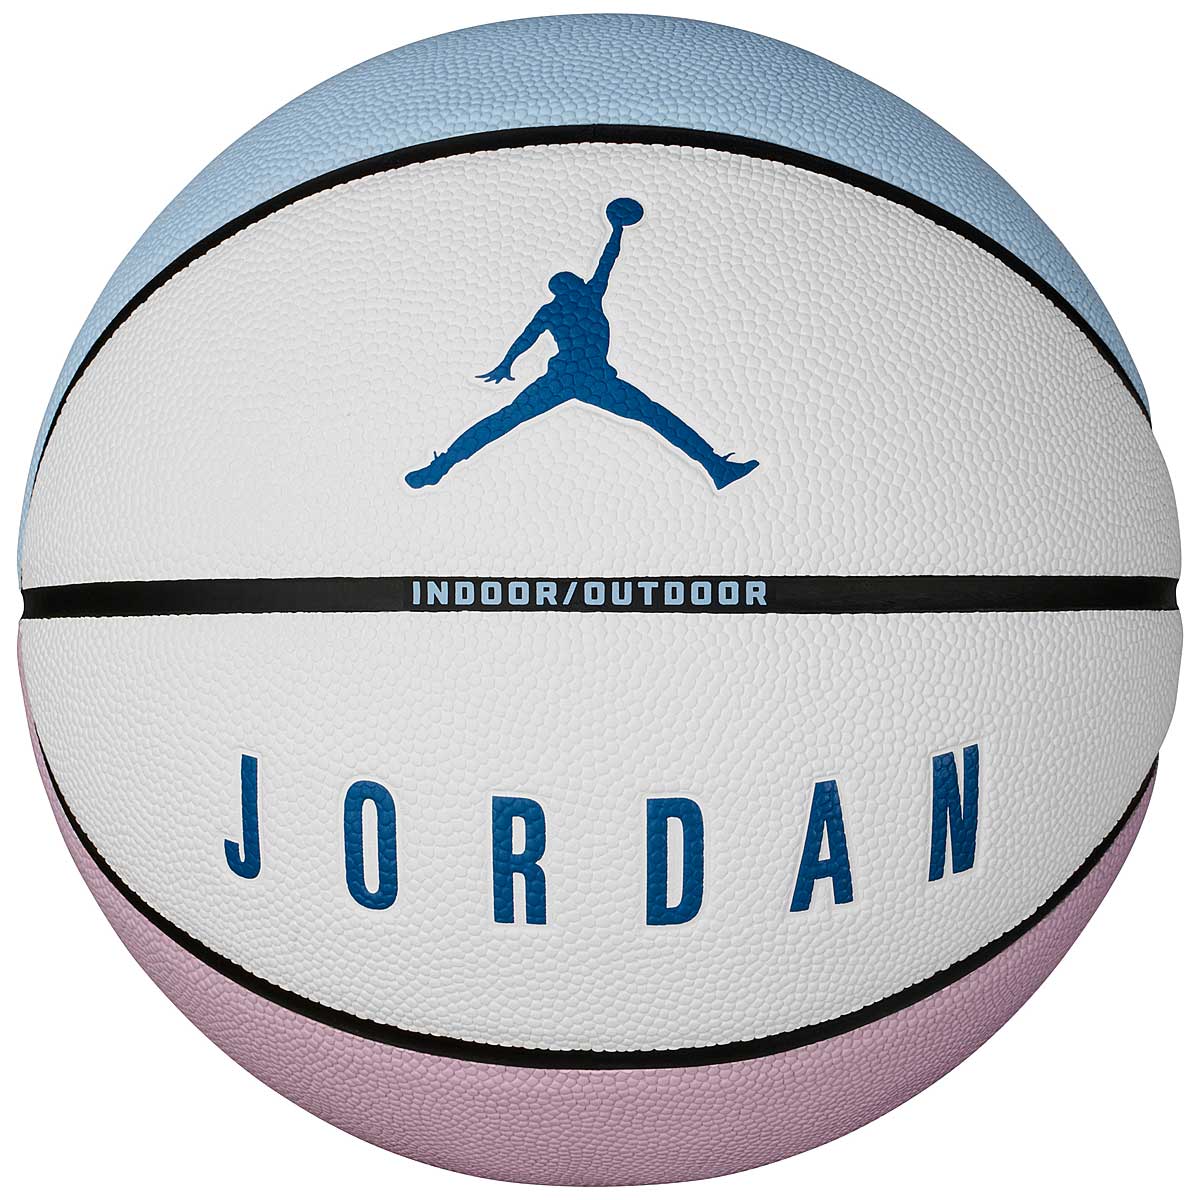 Image of Jordan Ultimate 2.0 Basketball, Ice Blue/white-vachetta Tan